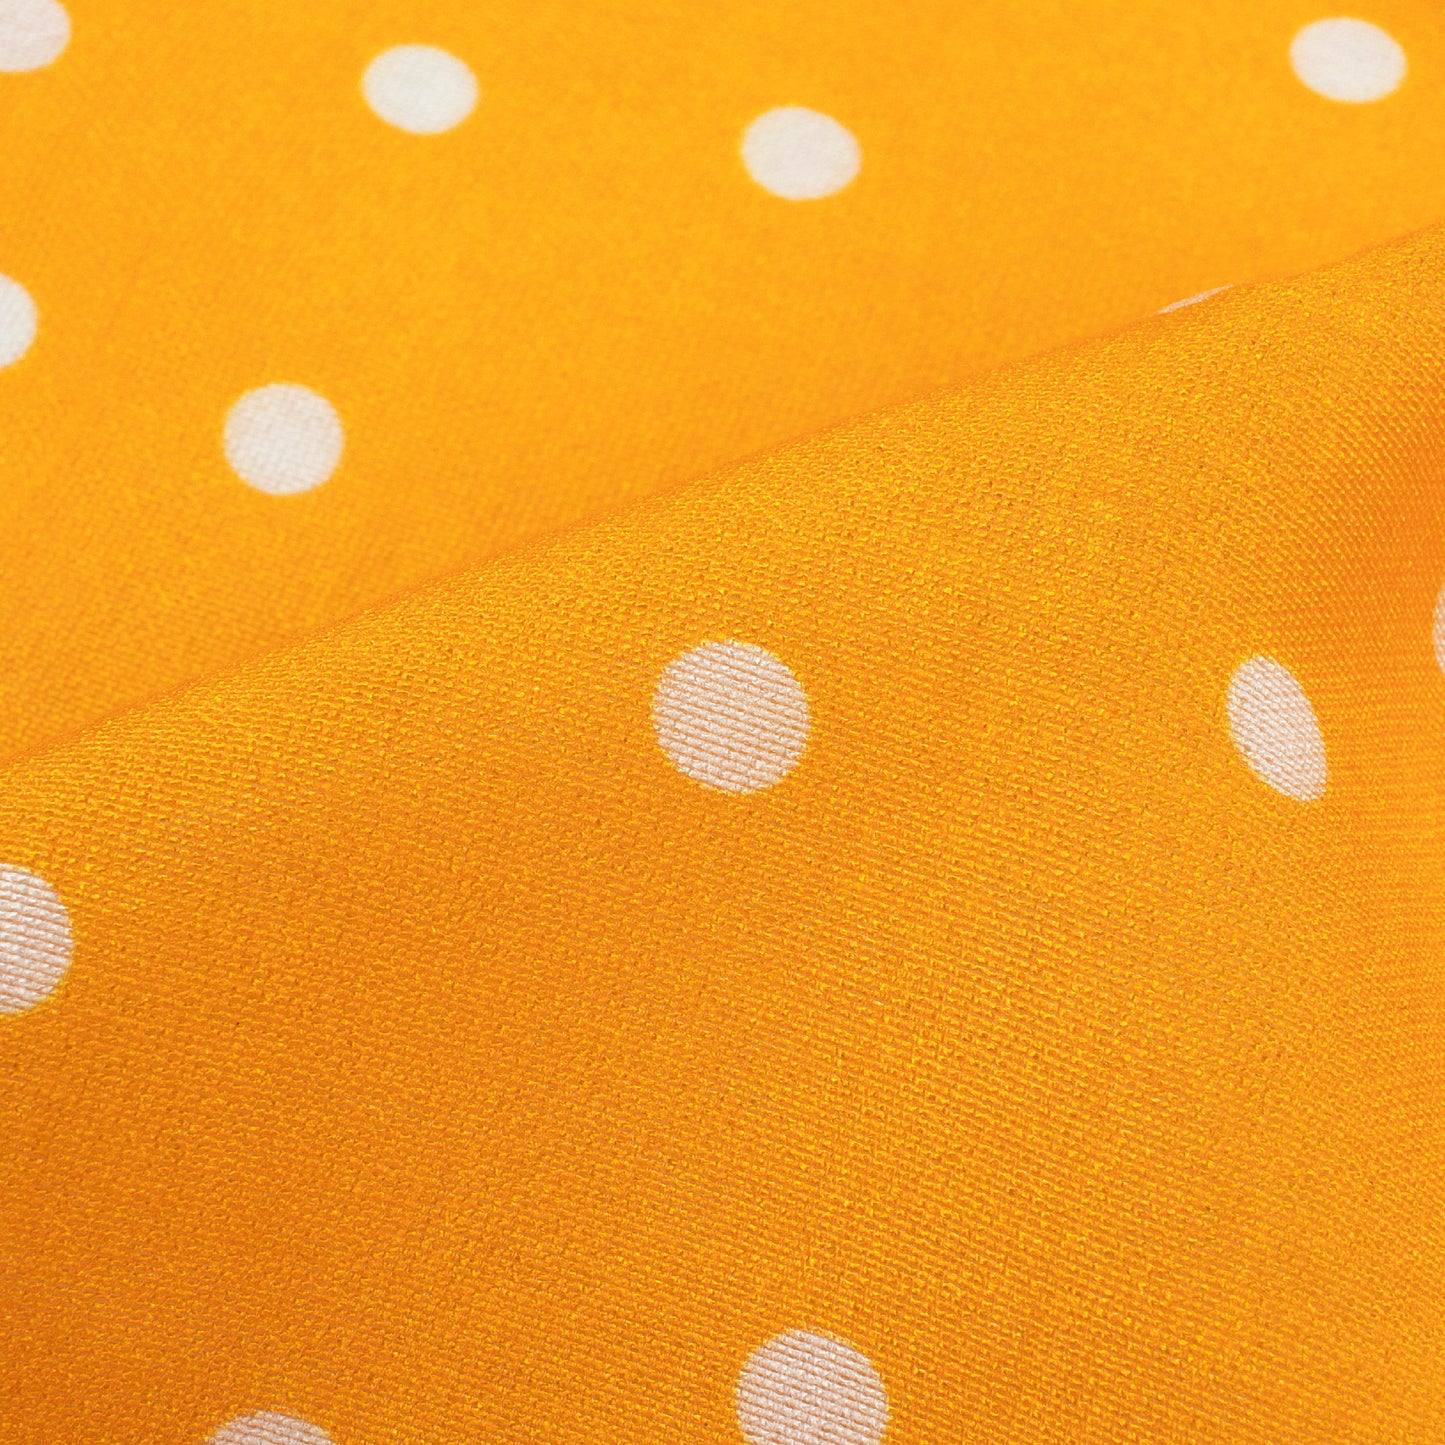 Meri Gold Orange And White Polka Dots Pattern Digital Print Viscose Chanderi Fabric